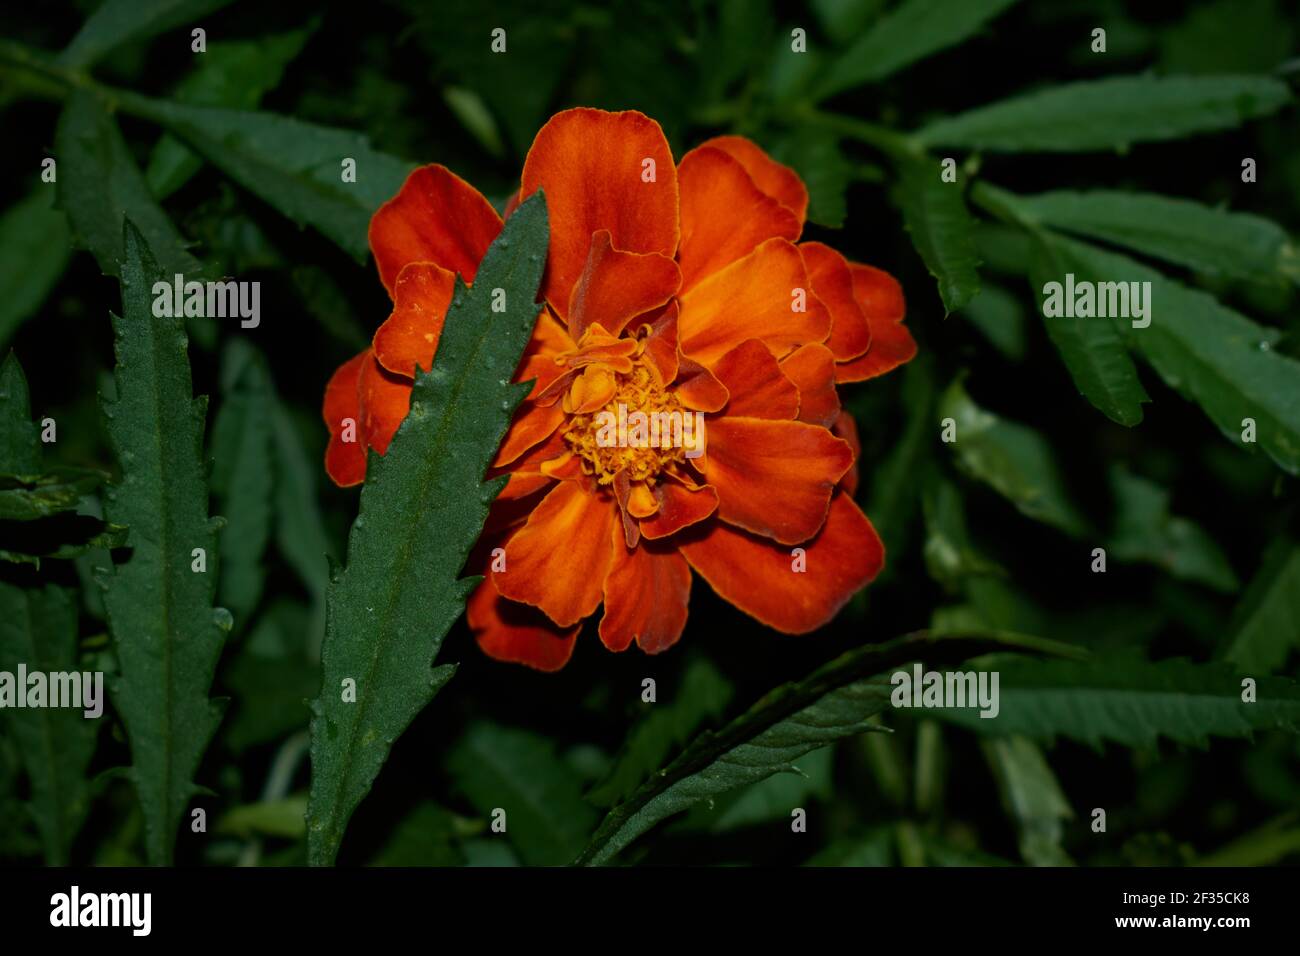 Orange flower with flowering petals Stock Photo